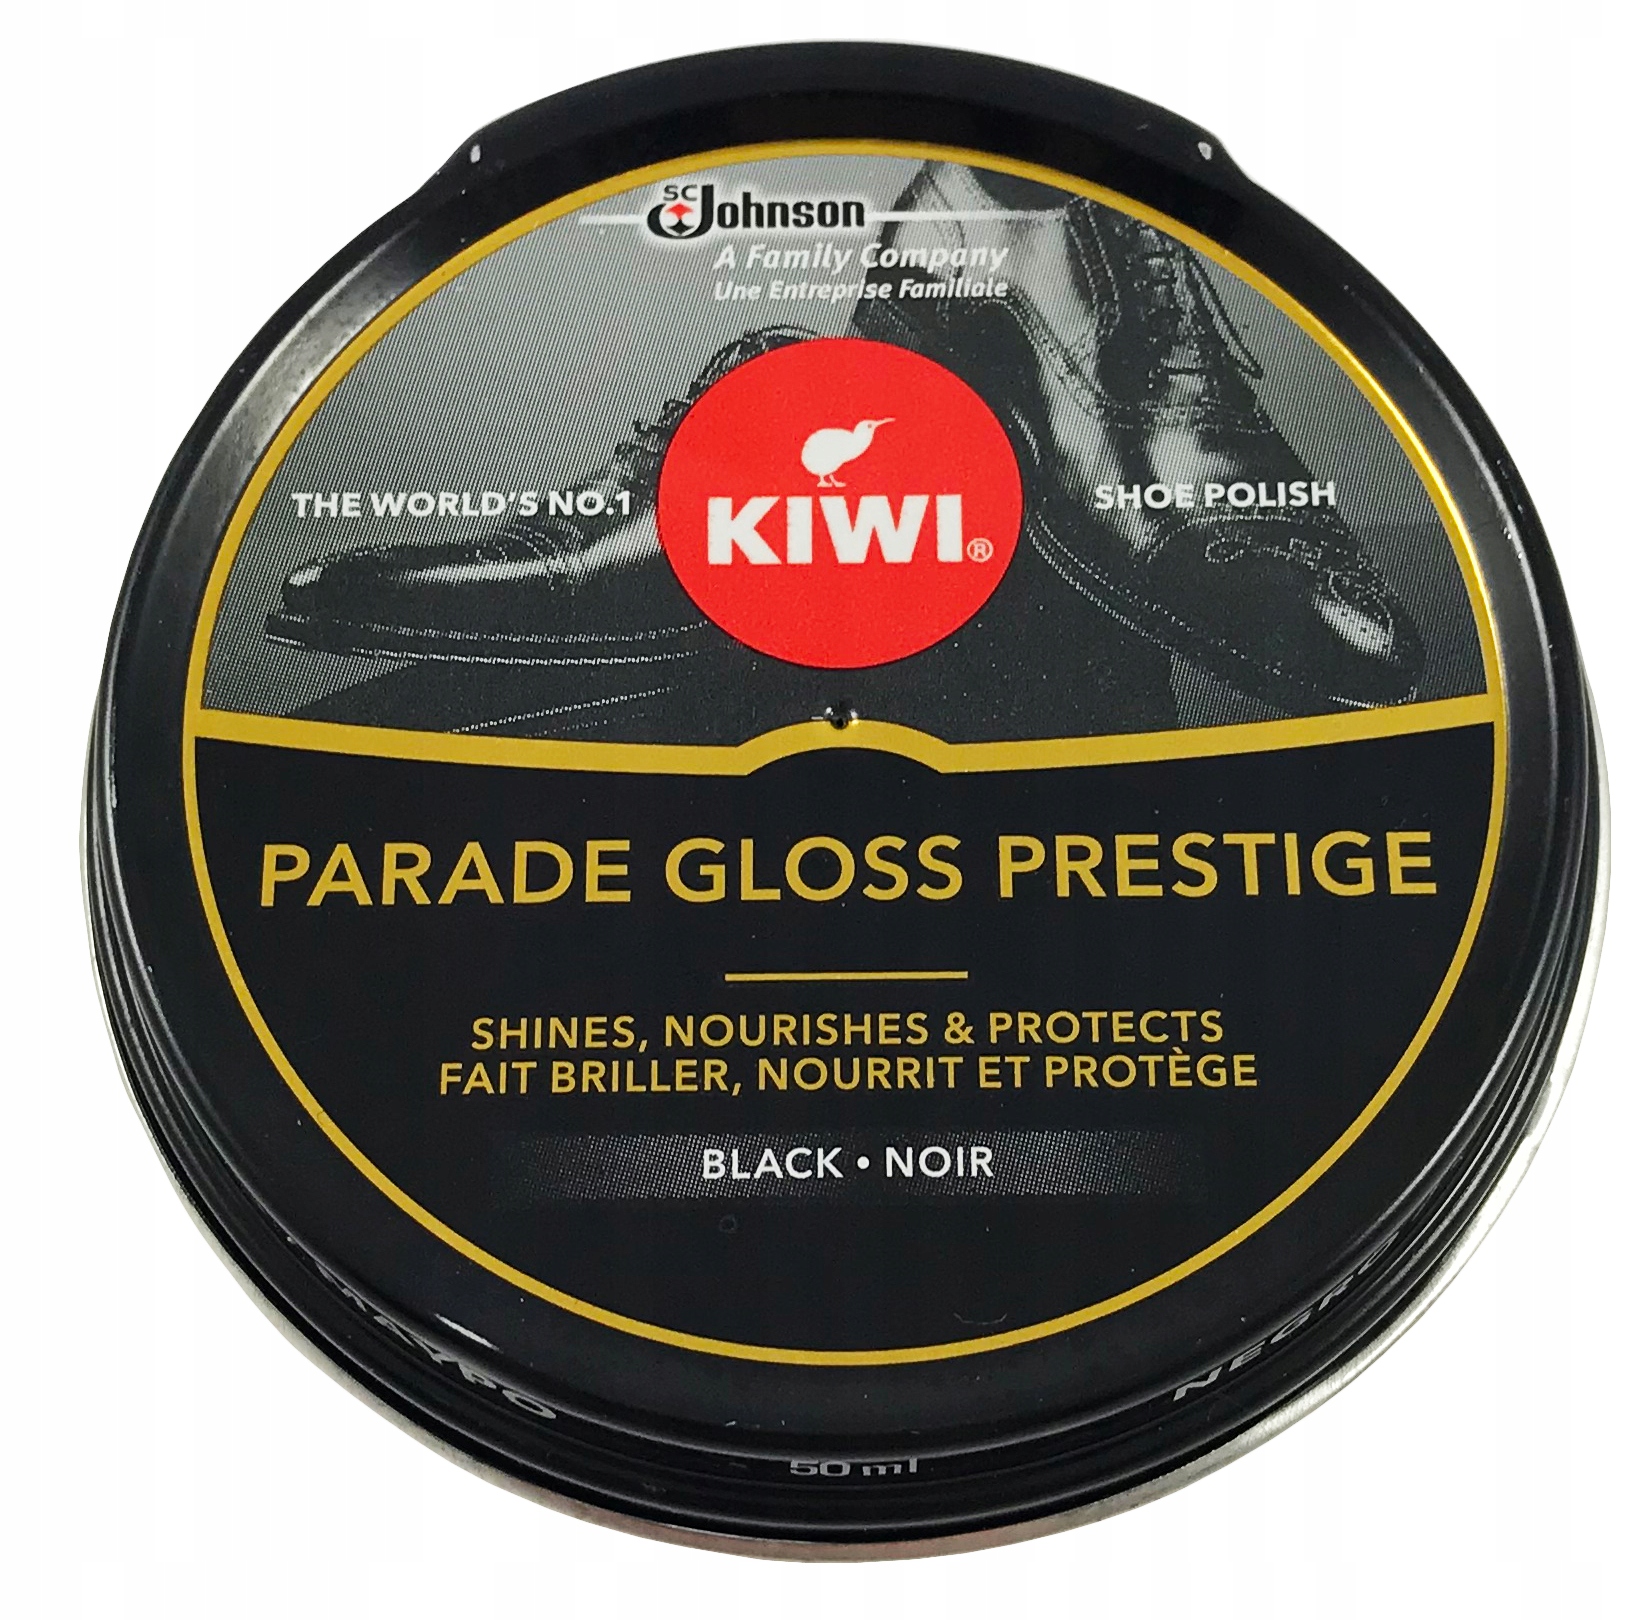 kiwi parade gloss prestige